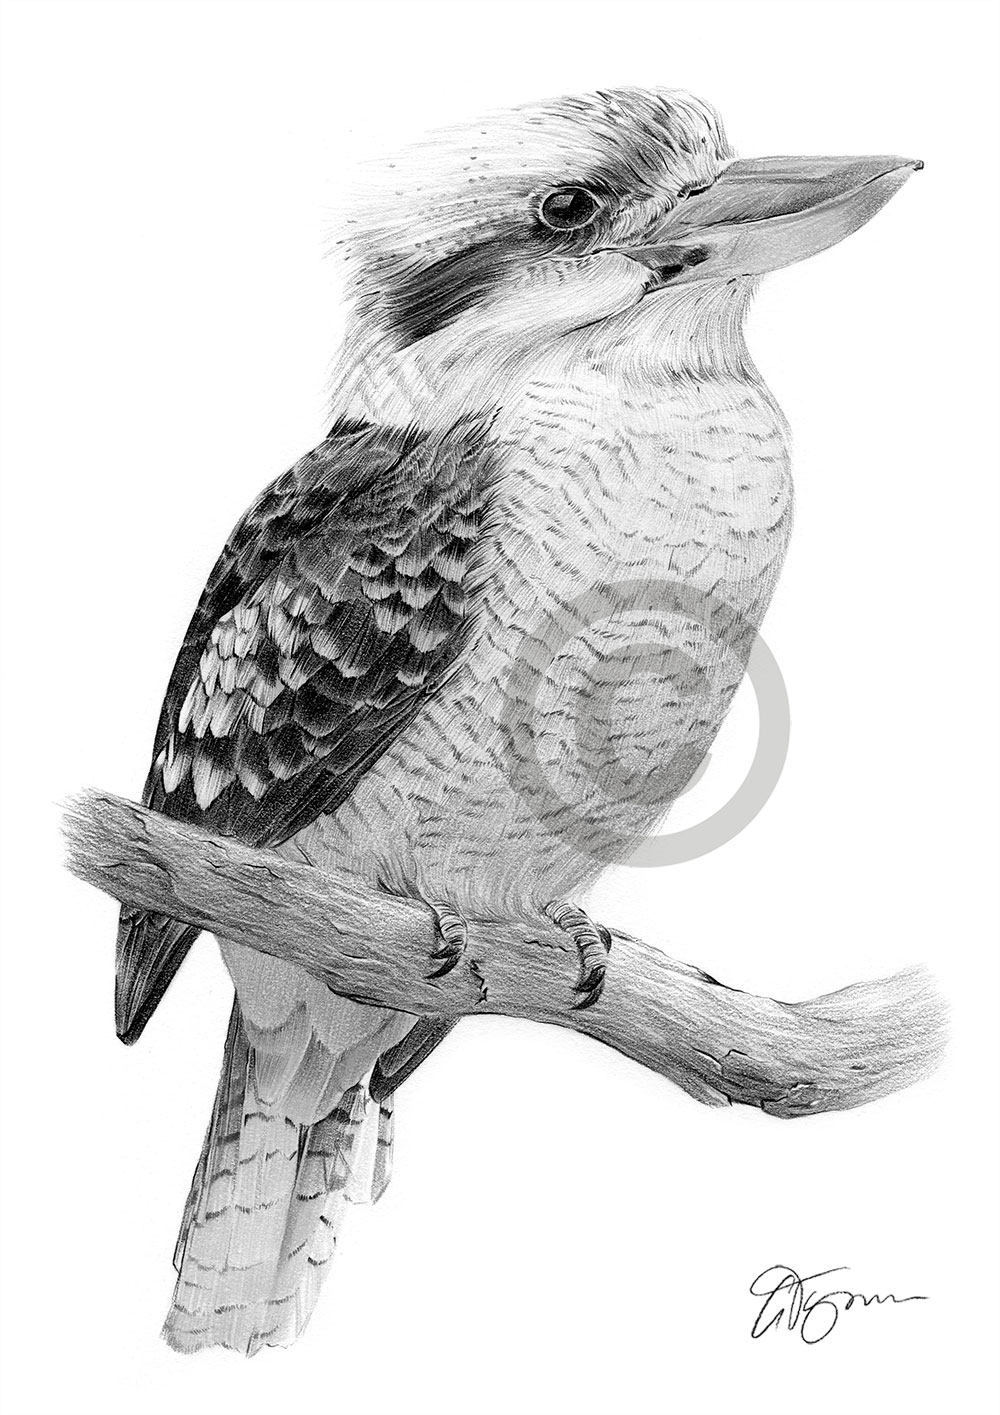 Pencil drawing of a kookaburra by UK artist Gary Tymon